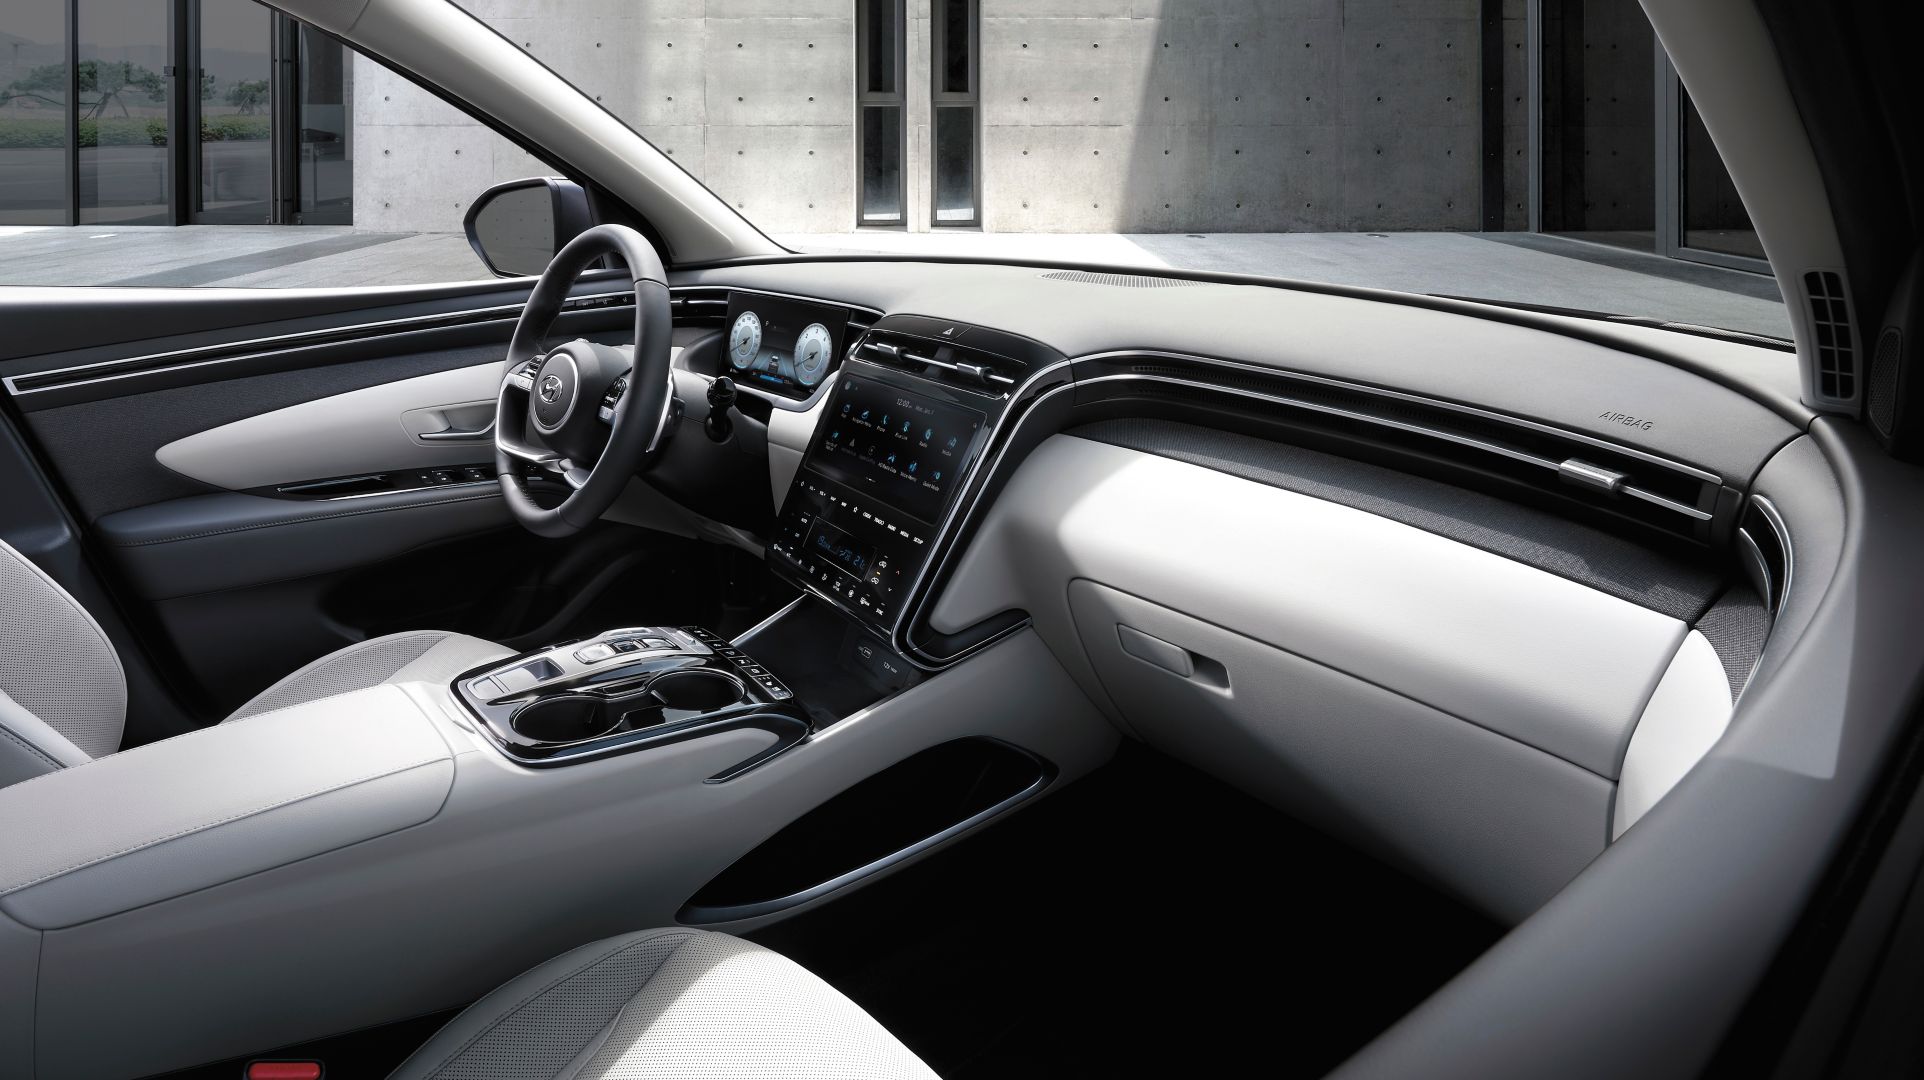 Interior design view of the All-New Hyundai Tucson Hybrid compact SUV's cockpit.